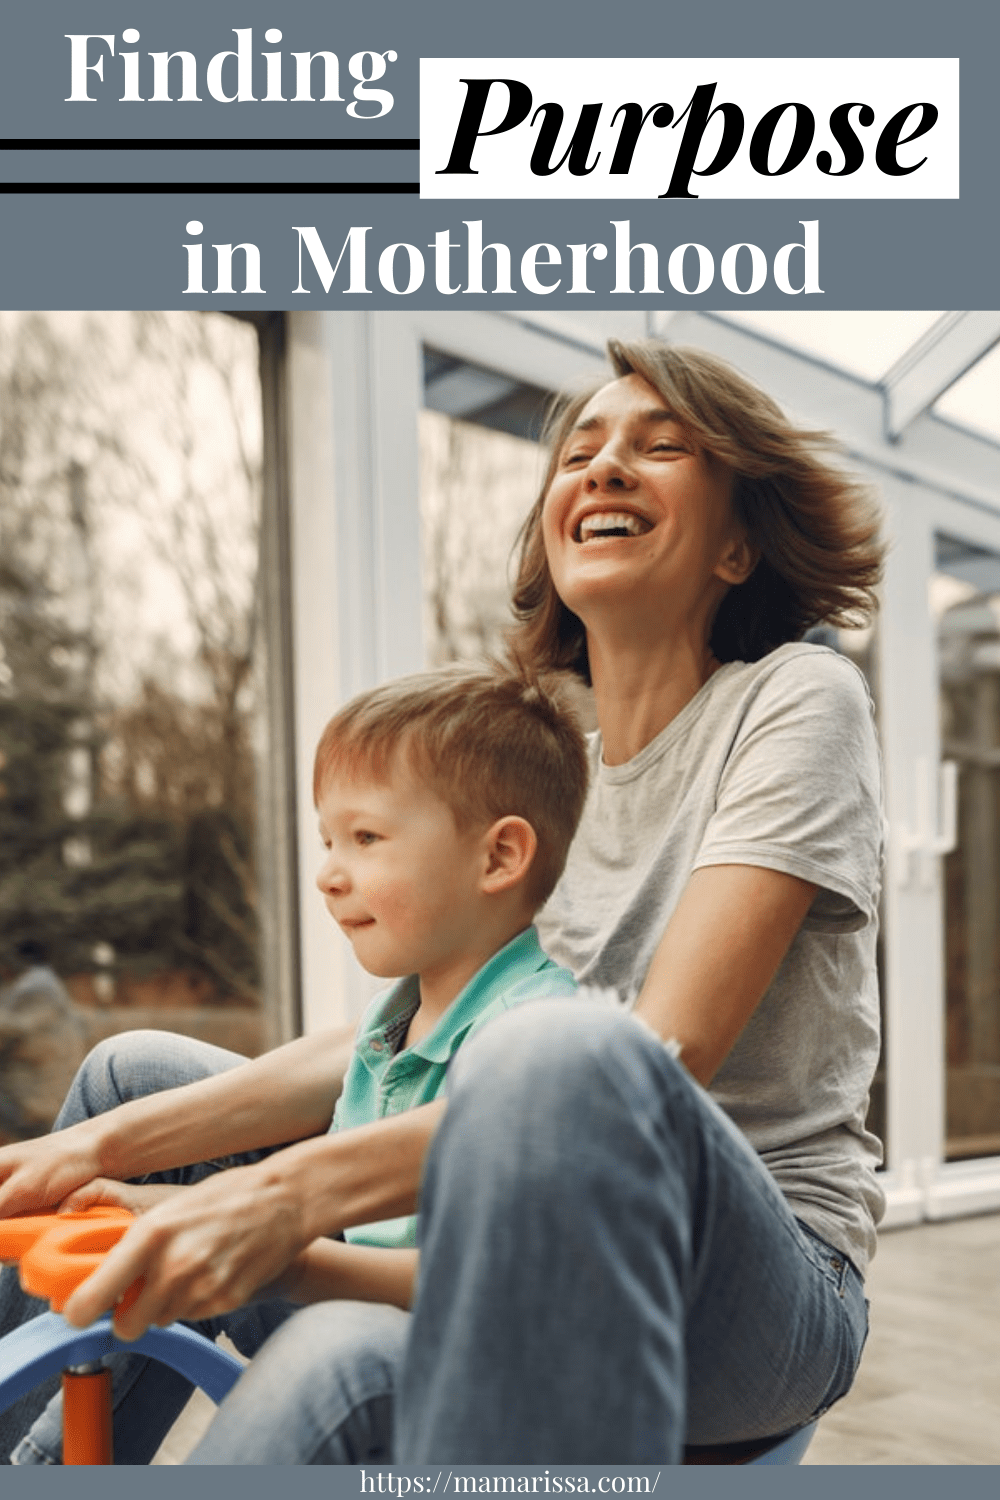 Finding Purpose in Motherhood